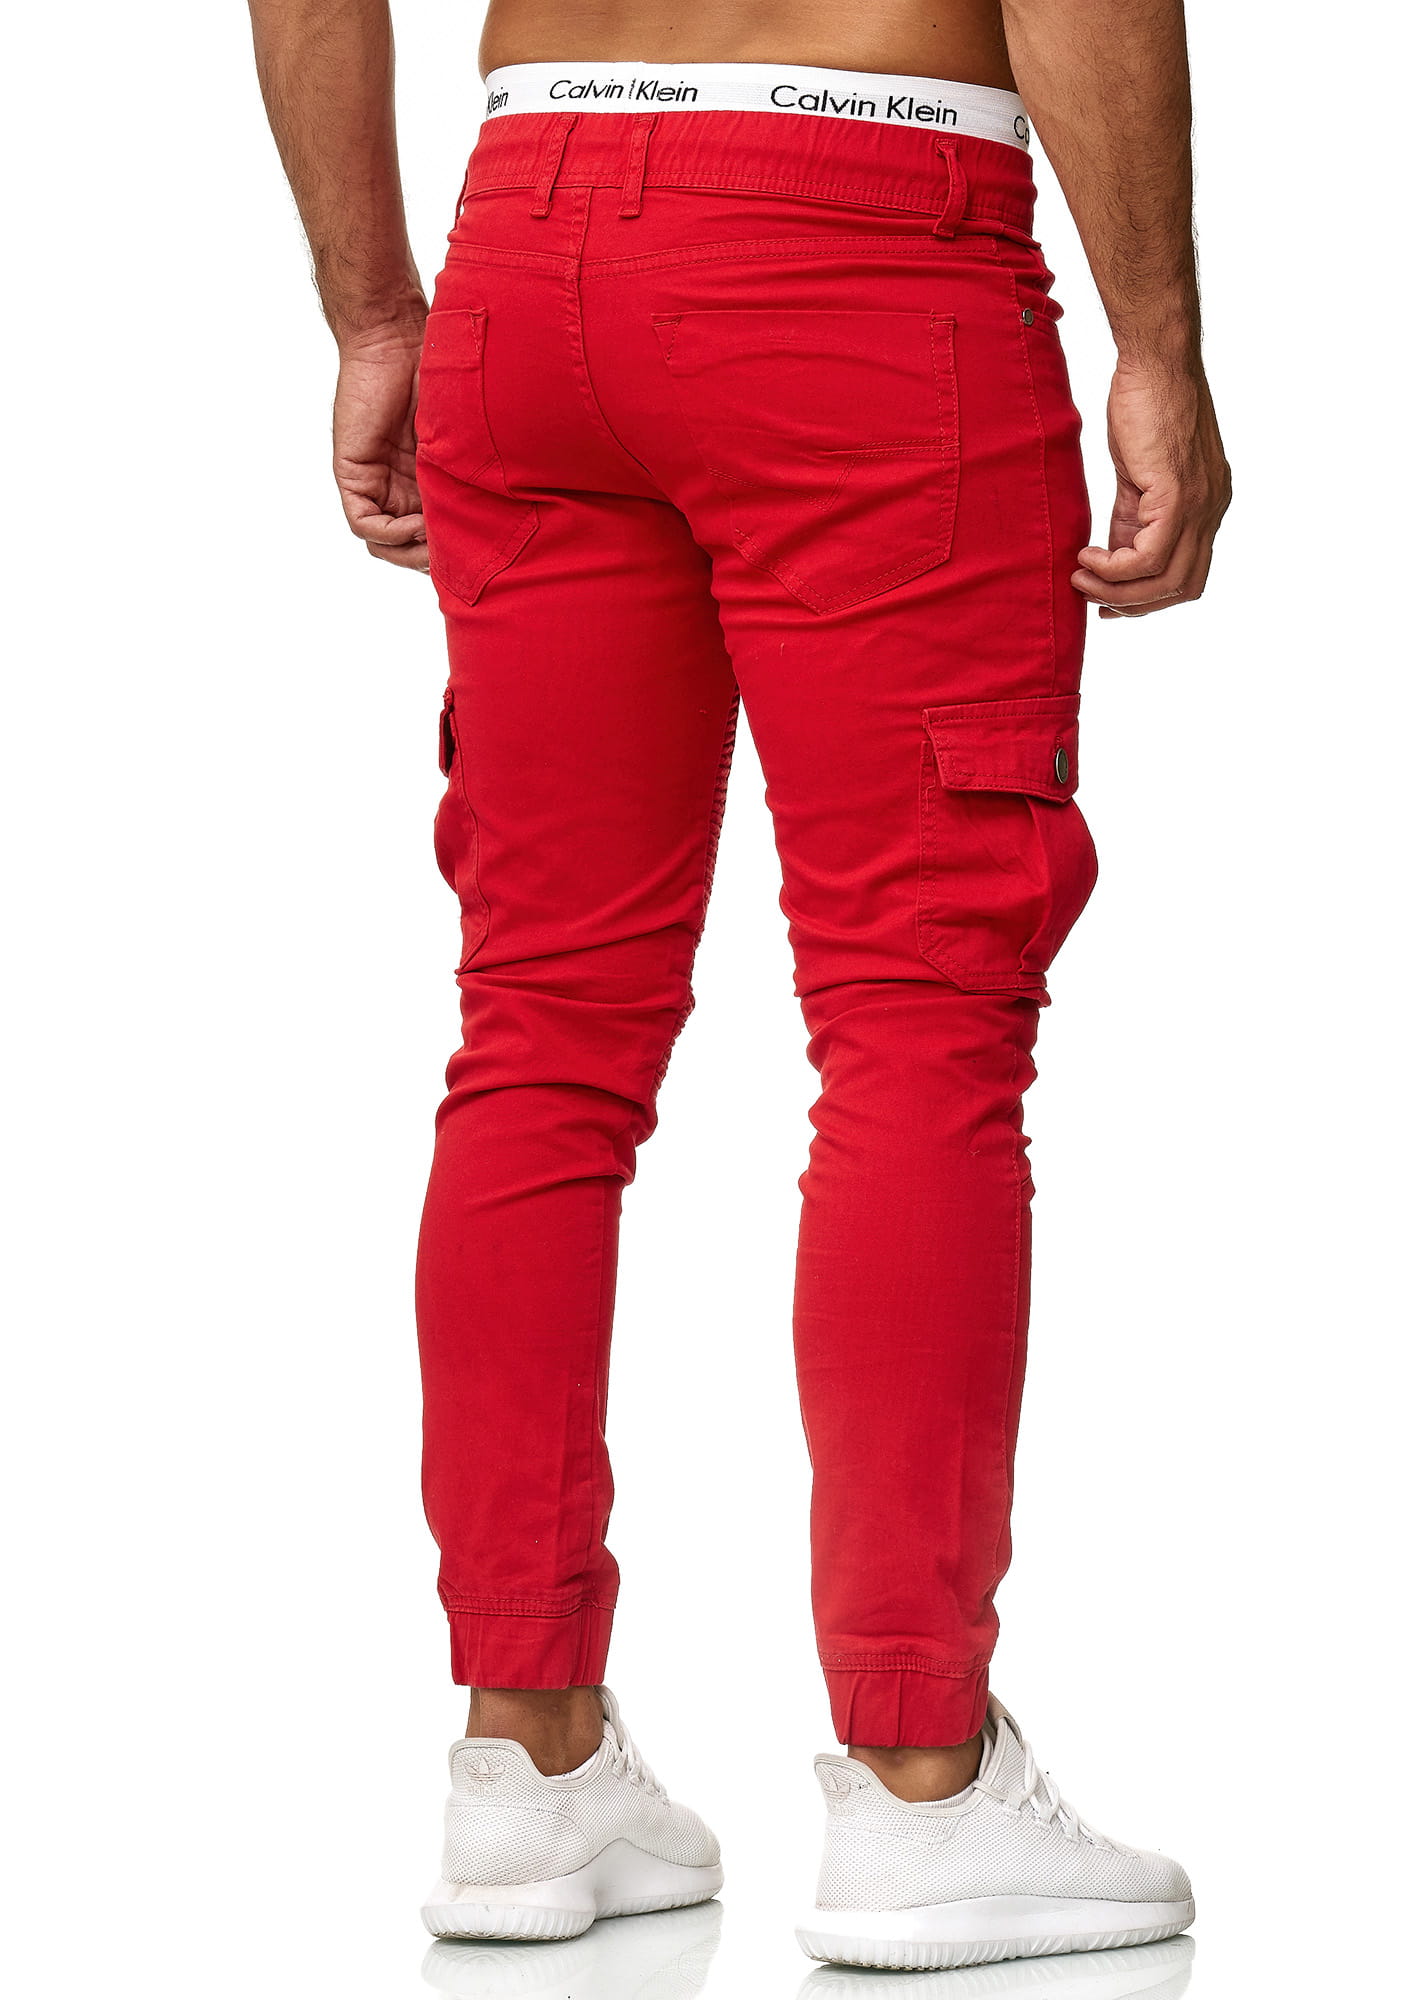 Herren Chino Hose Jeans Designer Chinohose Slim Fit Manner Skinny 37c Chinos Jeans Chinos Manner Oneredox Style Factory